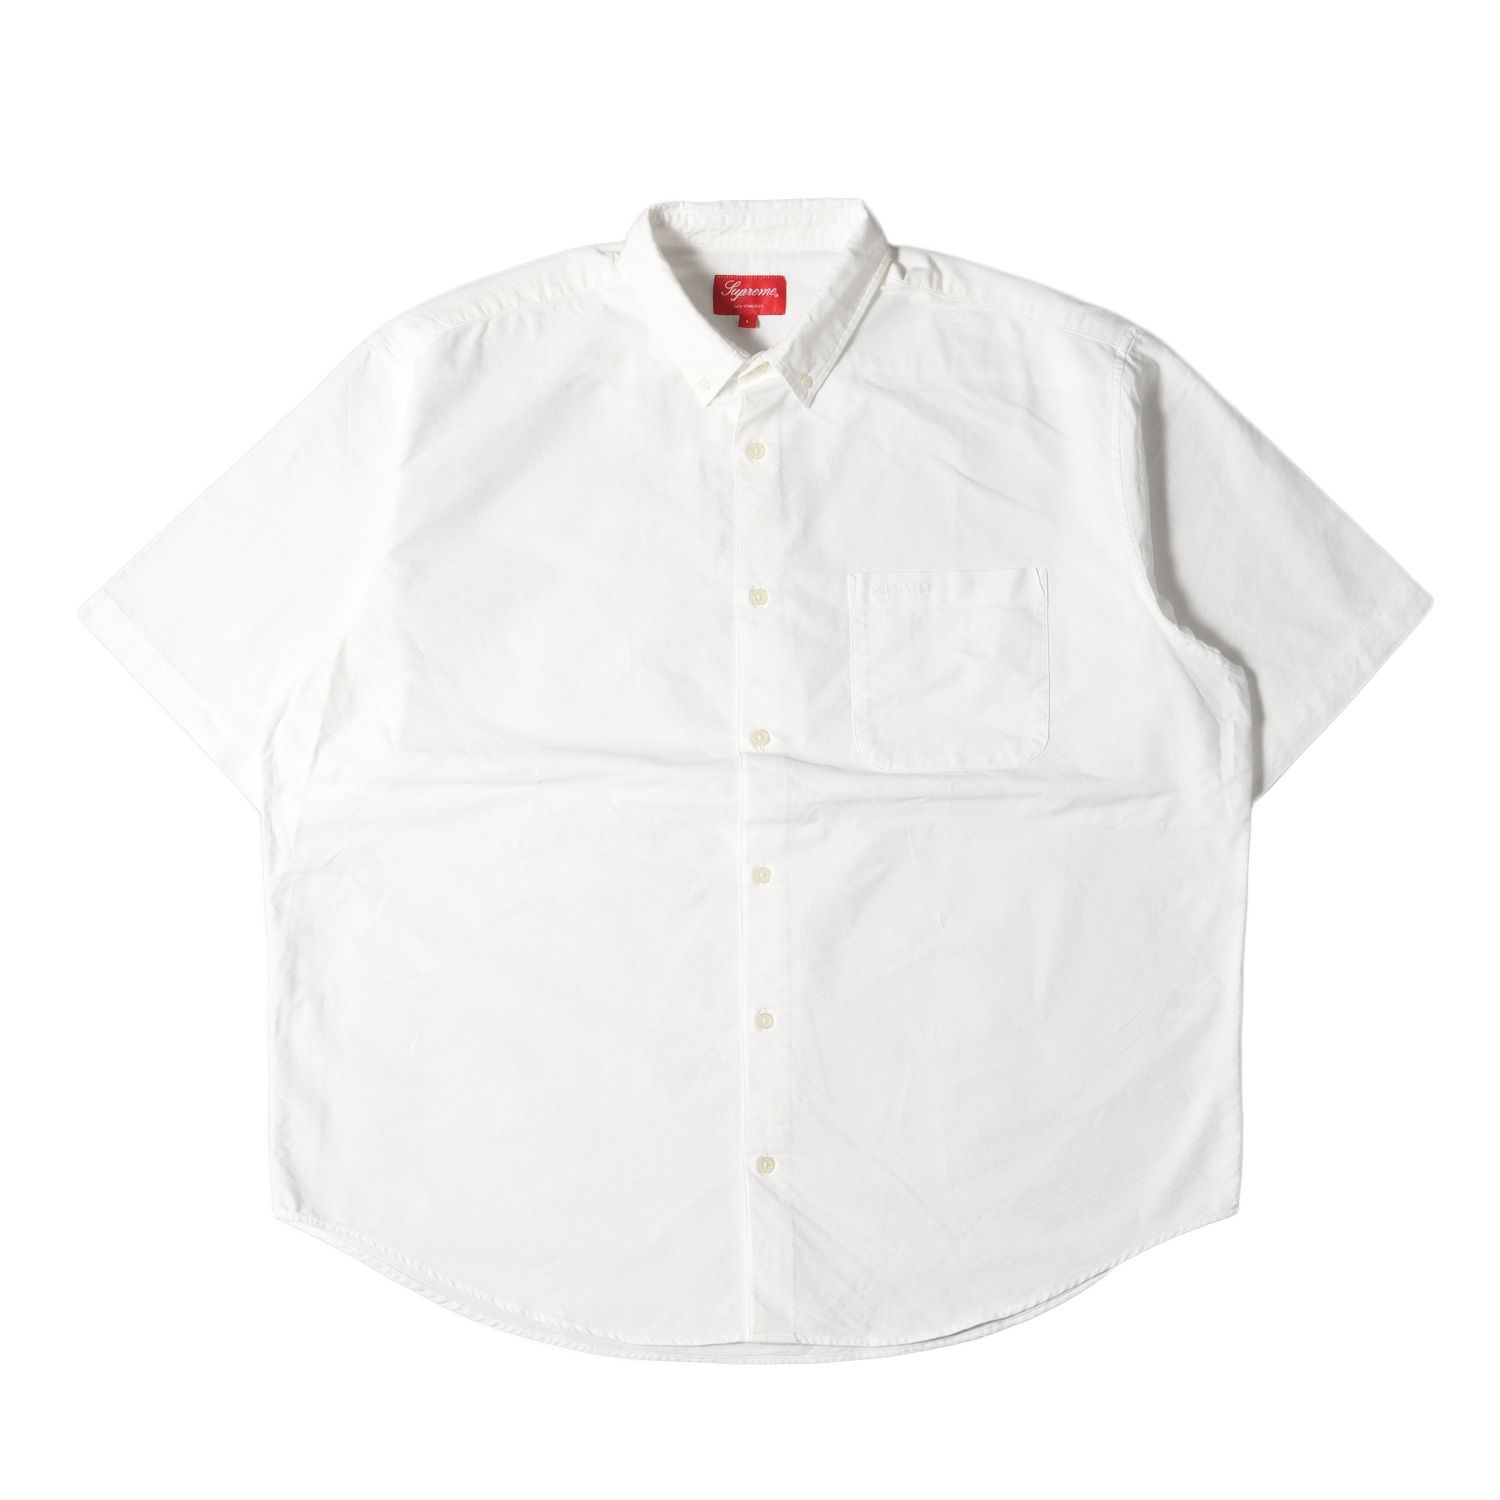 Supreme シュプリーム シャツ サイズ:L 23SS ルーズフィット オックスフォード ボタンダウン 半袖シャツ Loose Fit S/S Oxford  Shirt ホワイト 白 トップス カジュアルシャツ【メンズ】 - メルカリ